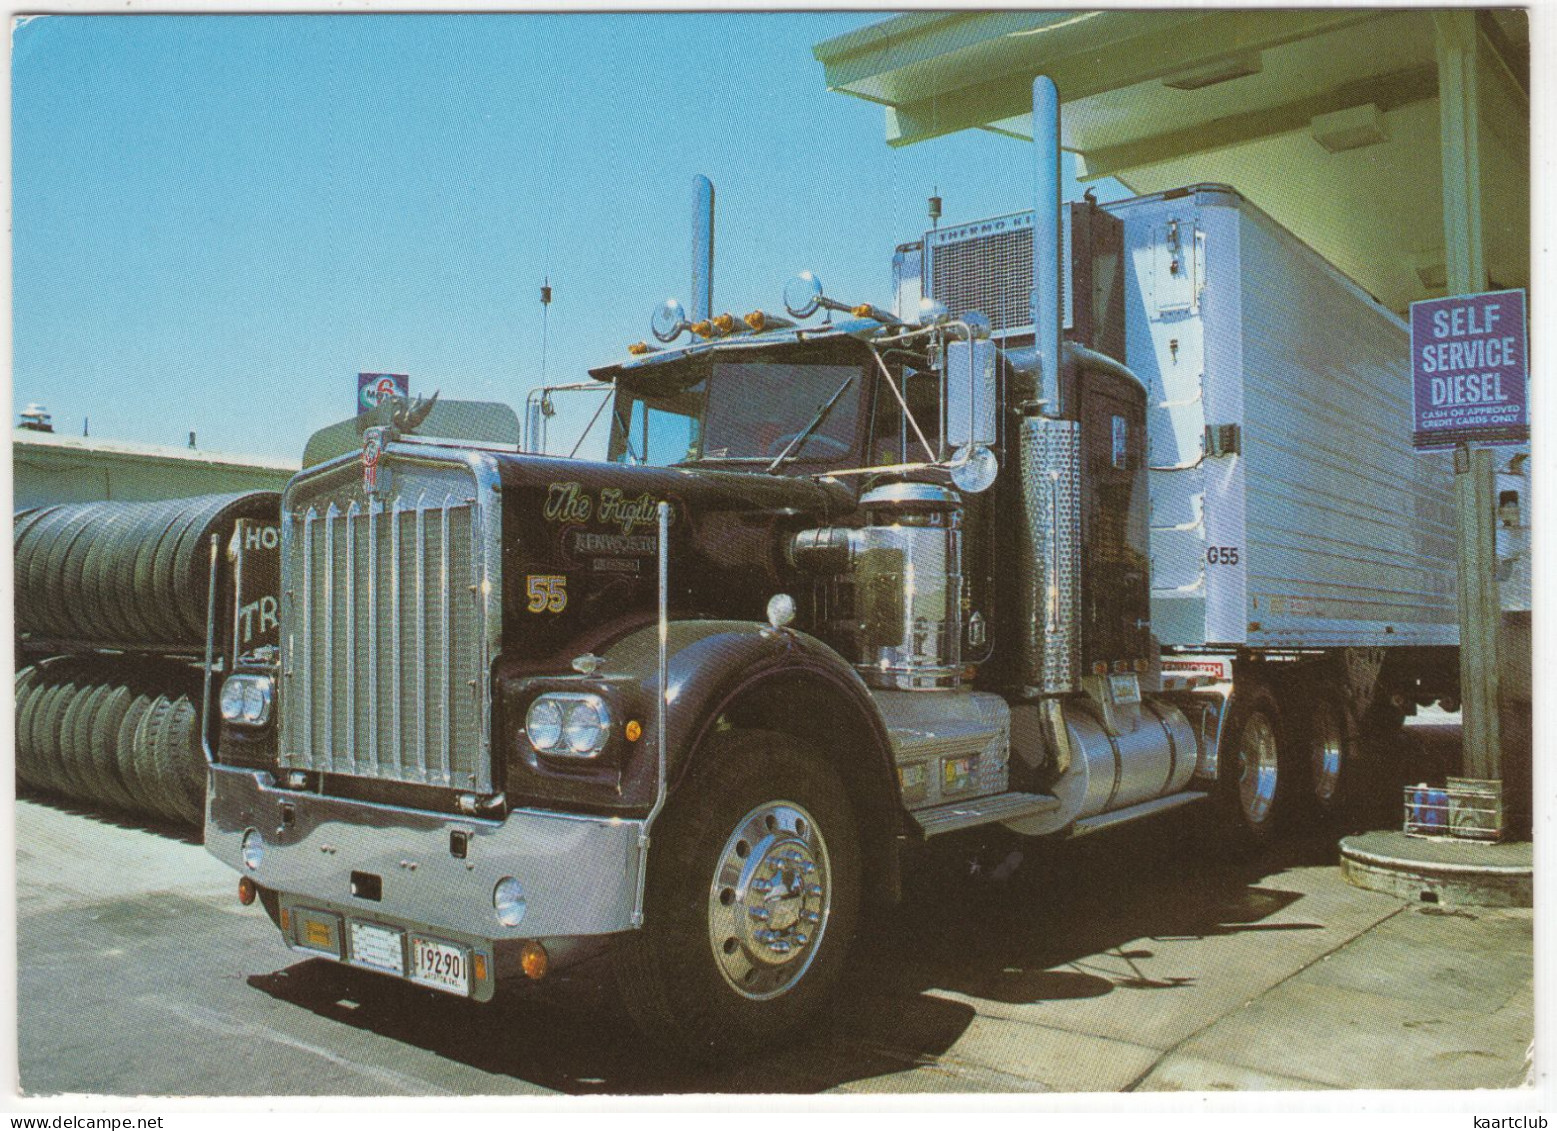 KENWORTH TRUCK - 'The Fugitive' - 'Self-Service-Diesel' Station - (USA) - Trucks, Vans &  Lorries